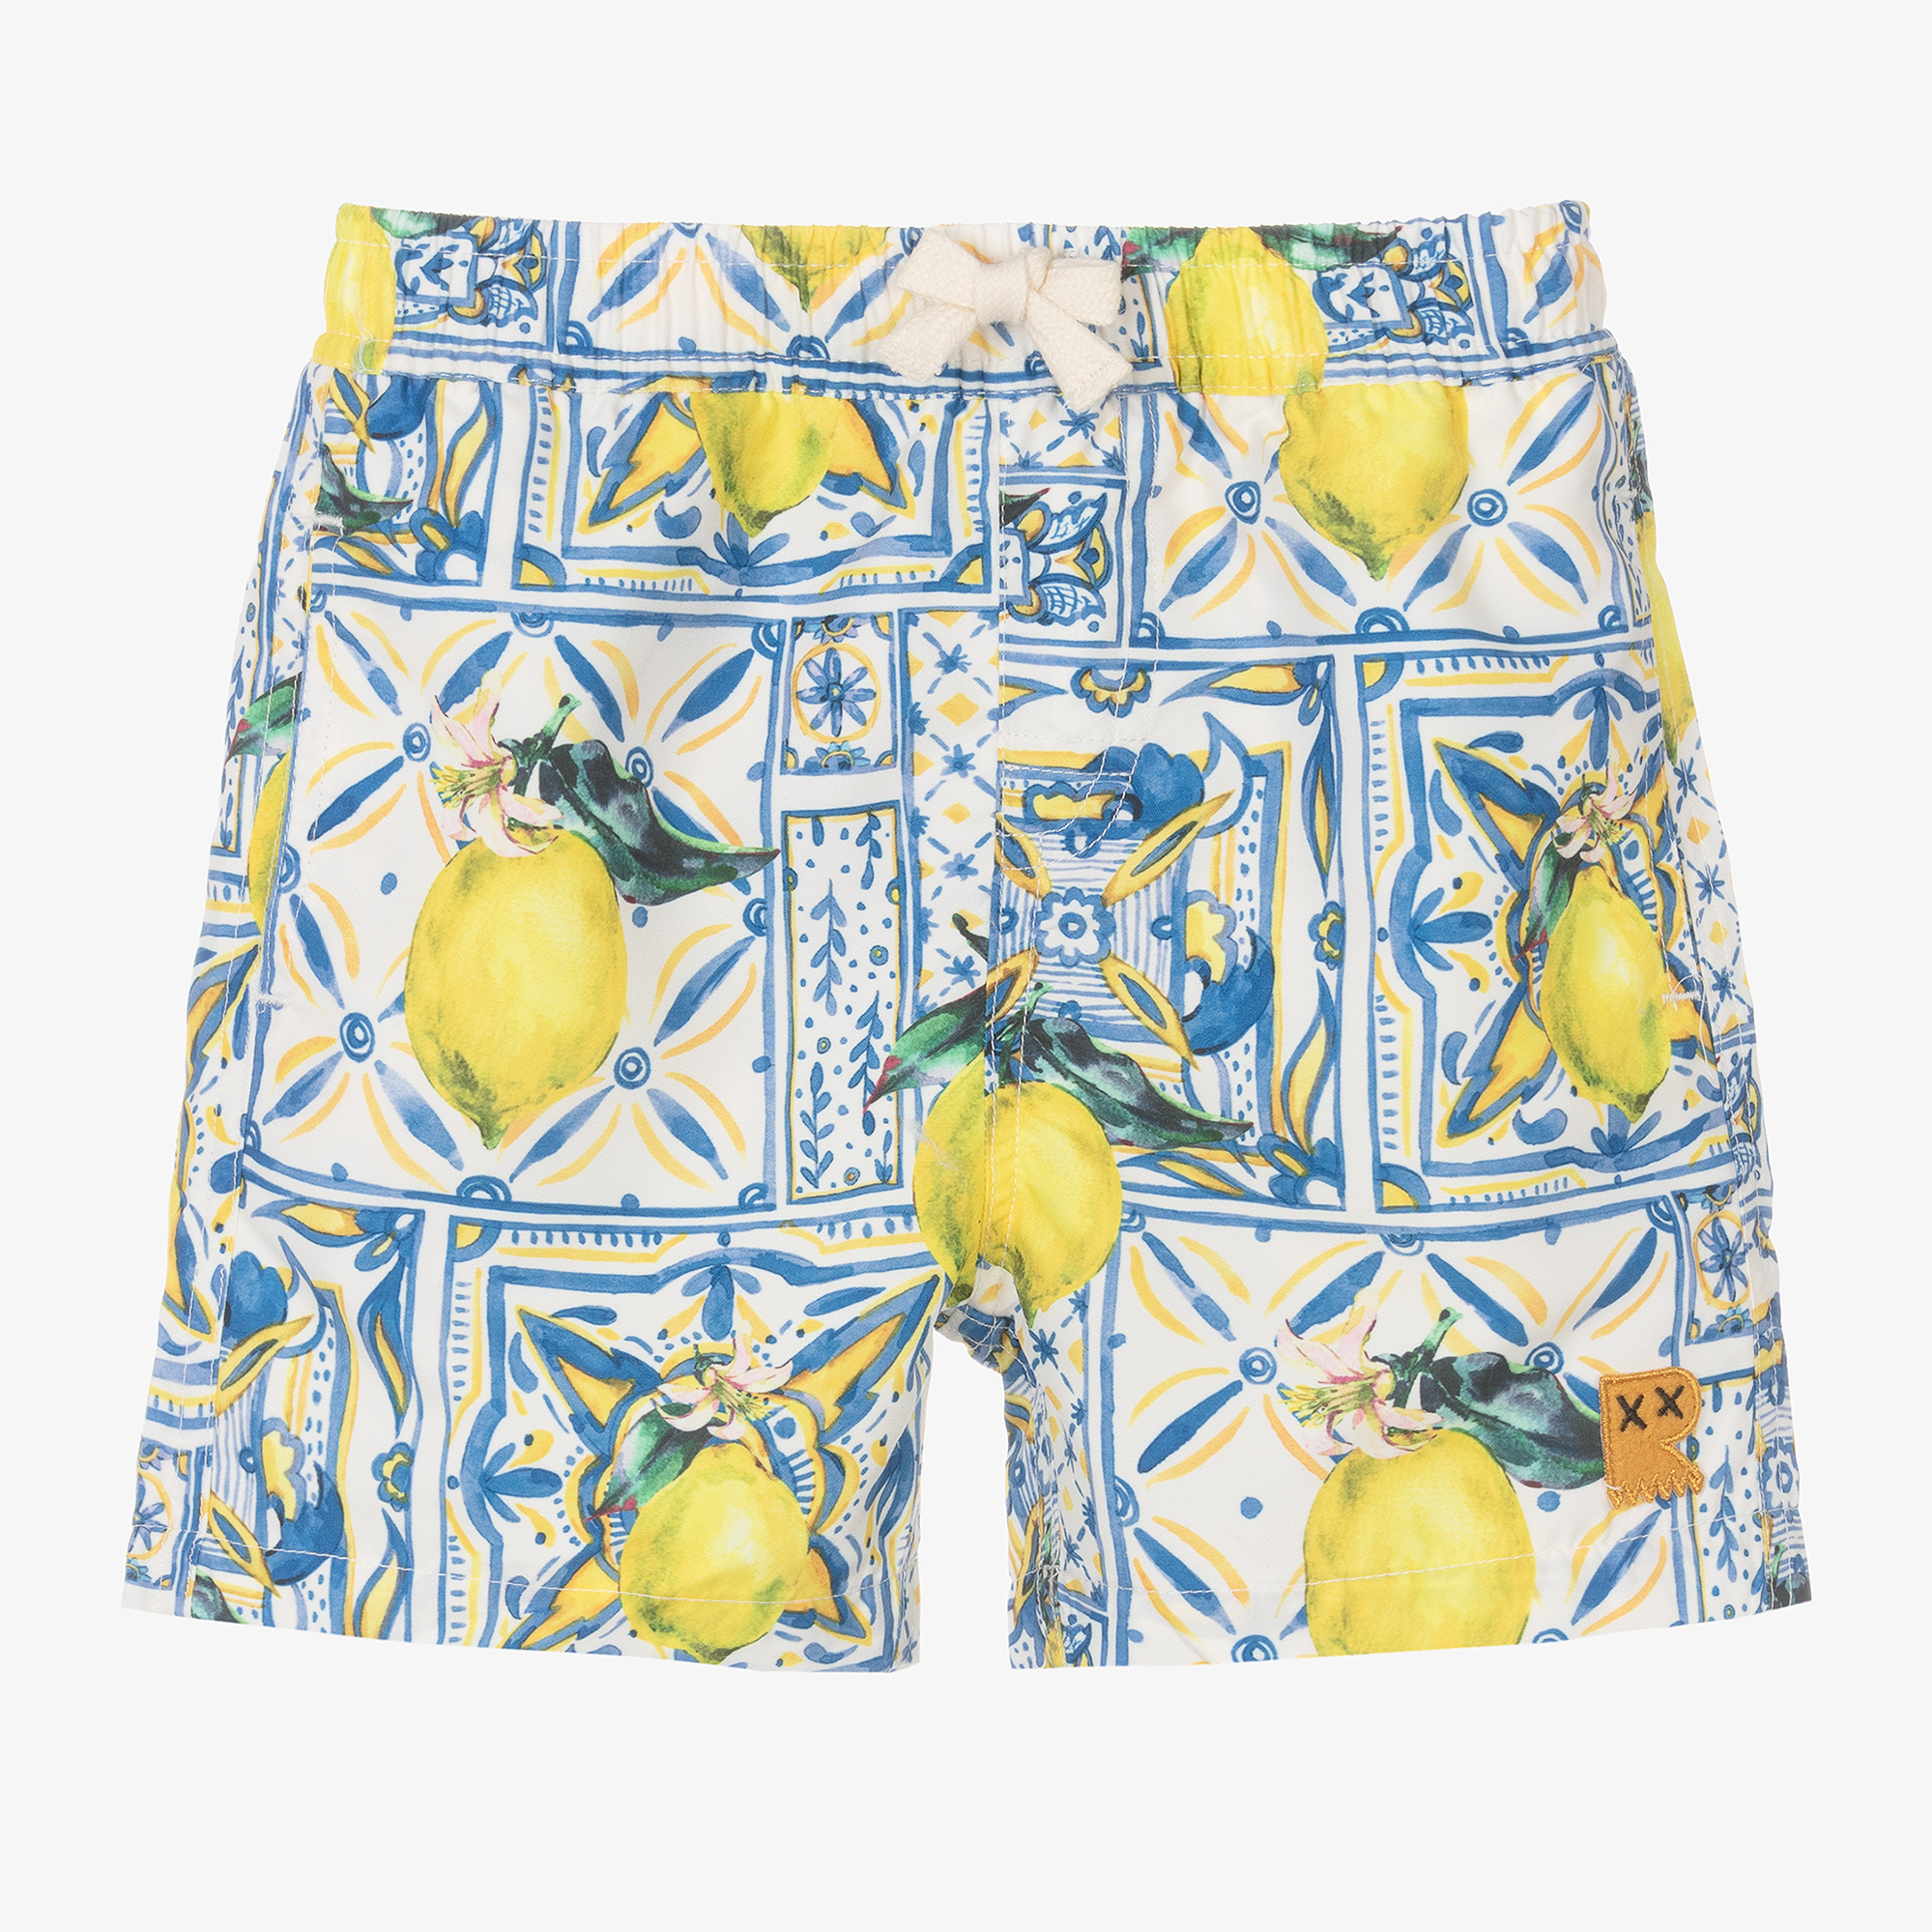  susiyo Yellow Lemons Boys Swim Trunks Teens Quick Dry Beach  Board Shorts Swimsuit : Clothing, Shoes & Jewelry